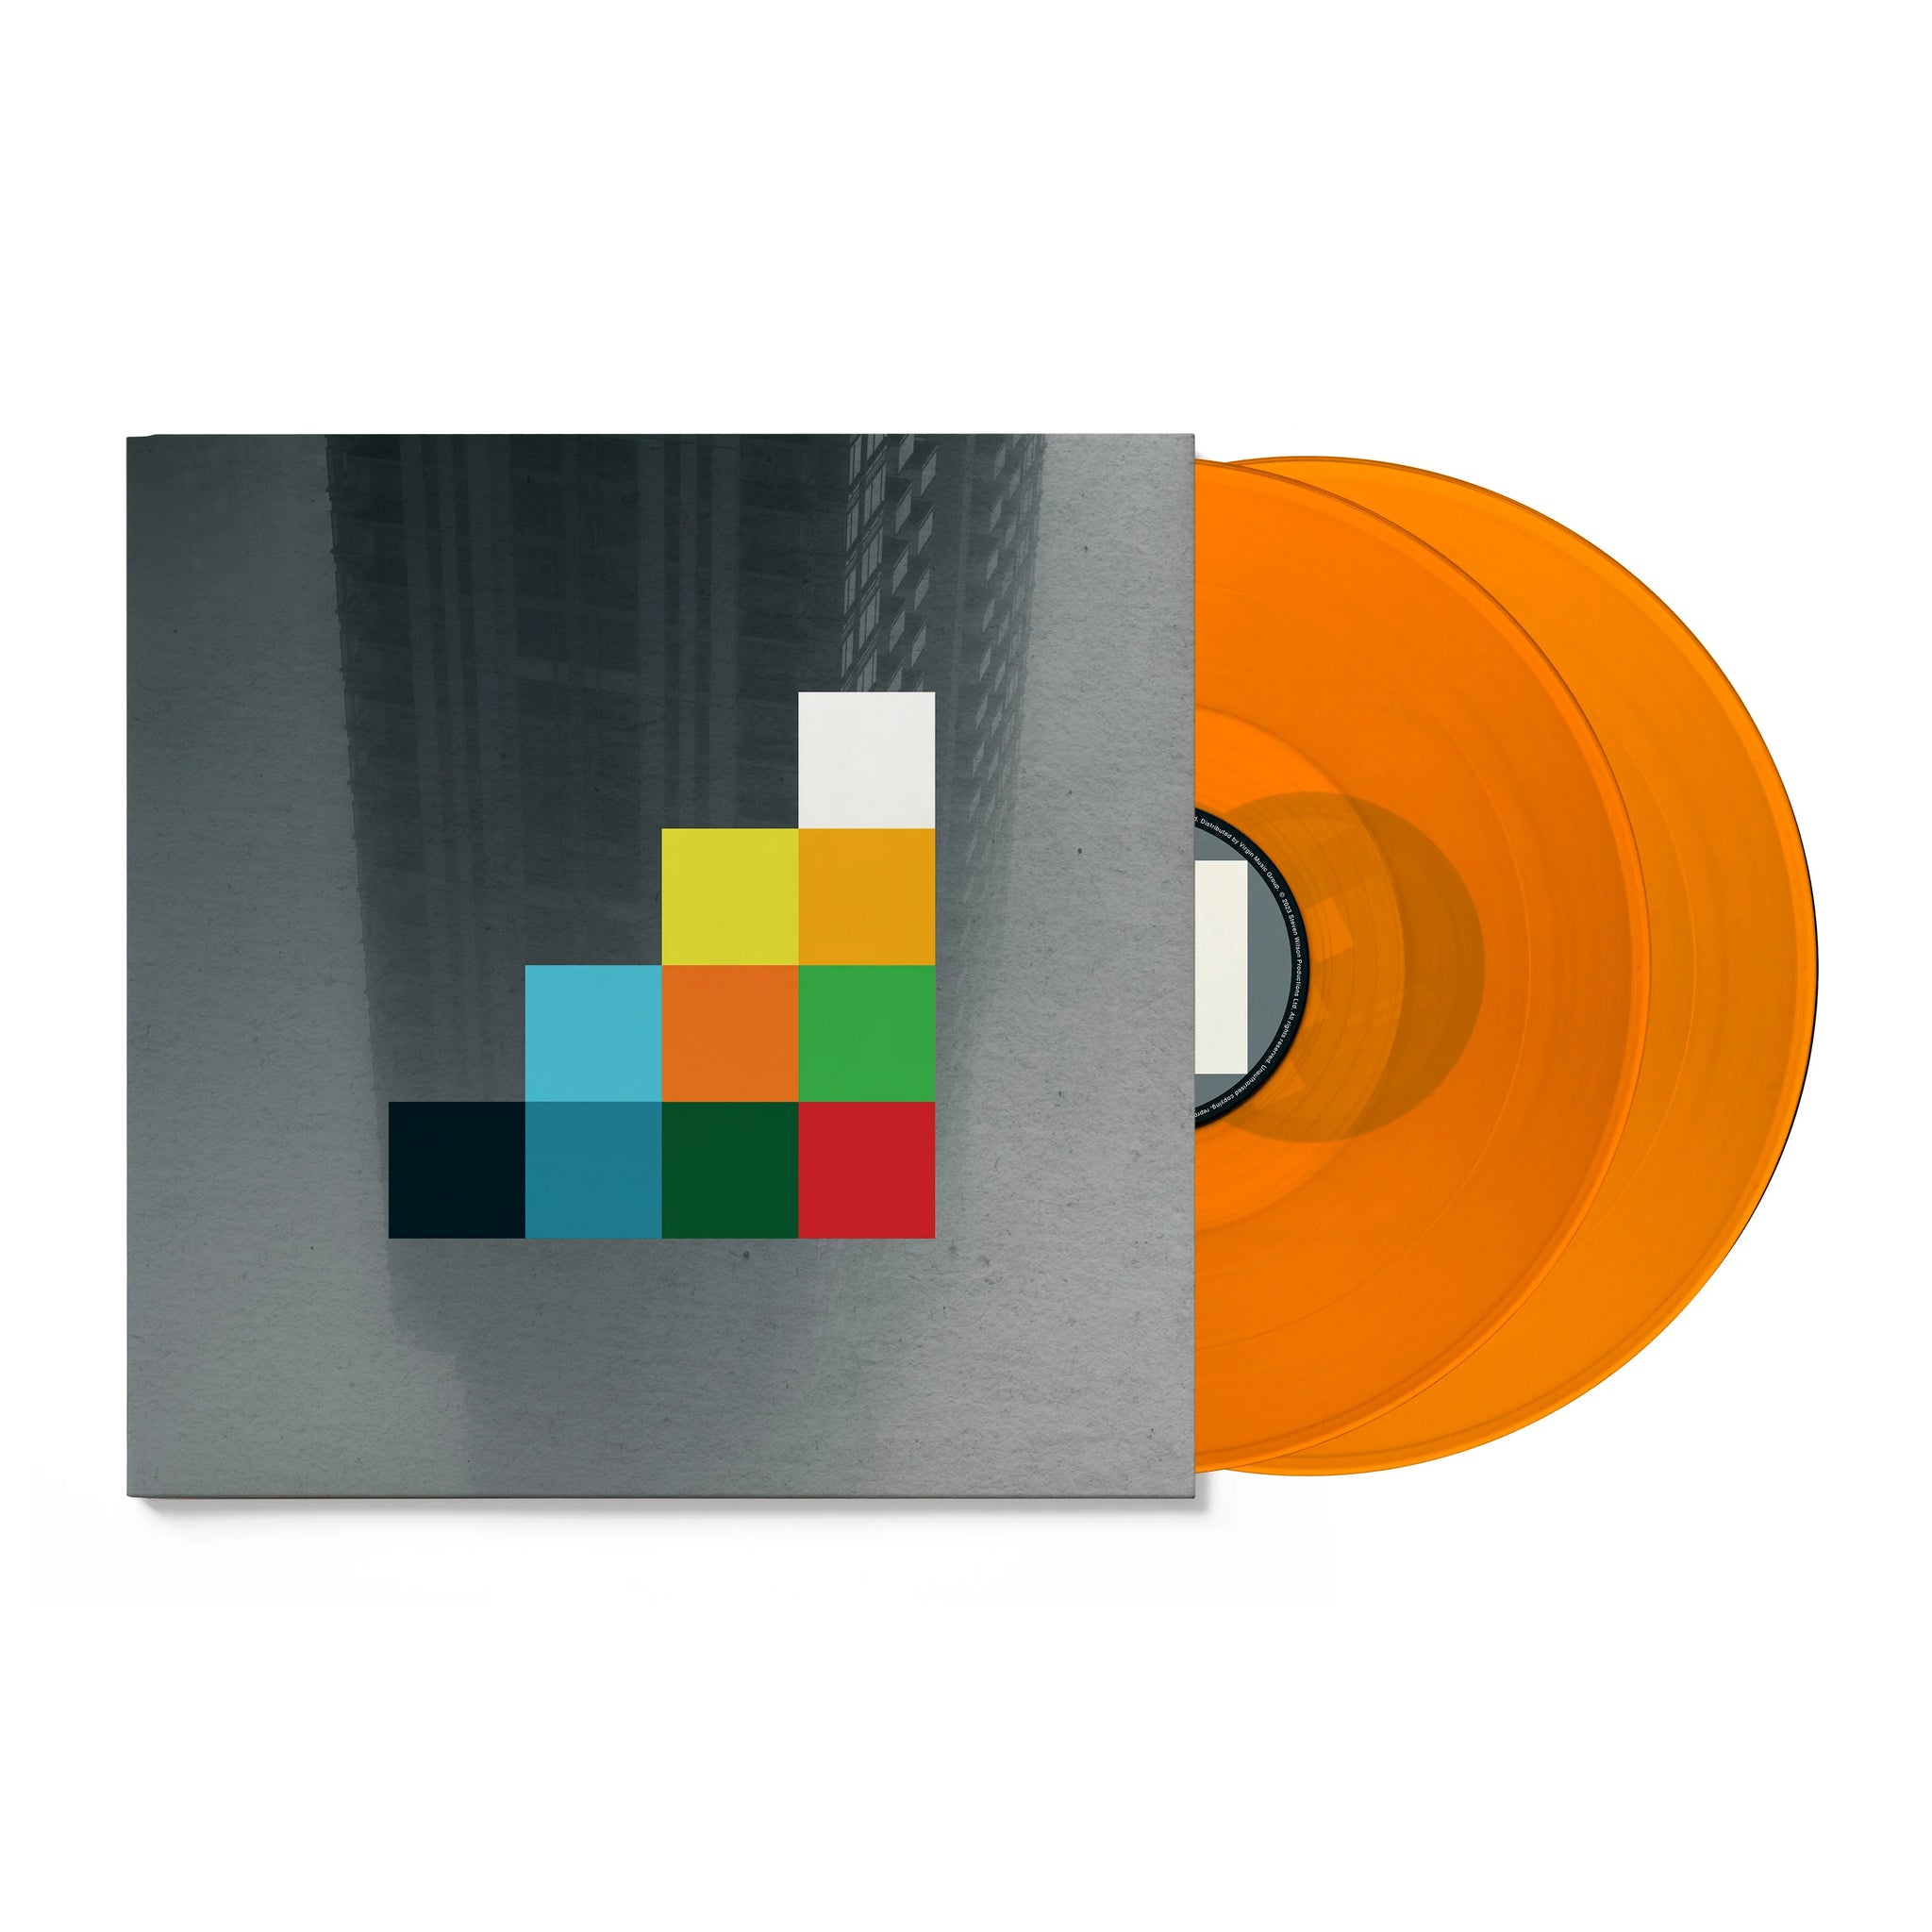 STEVE WILSON - The Harmony Codex - 2LP - 180g Orange Vinyl [SEP 29]